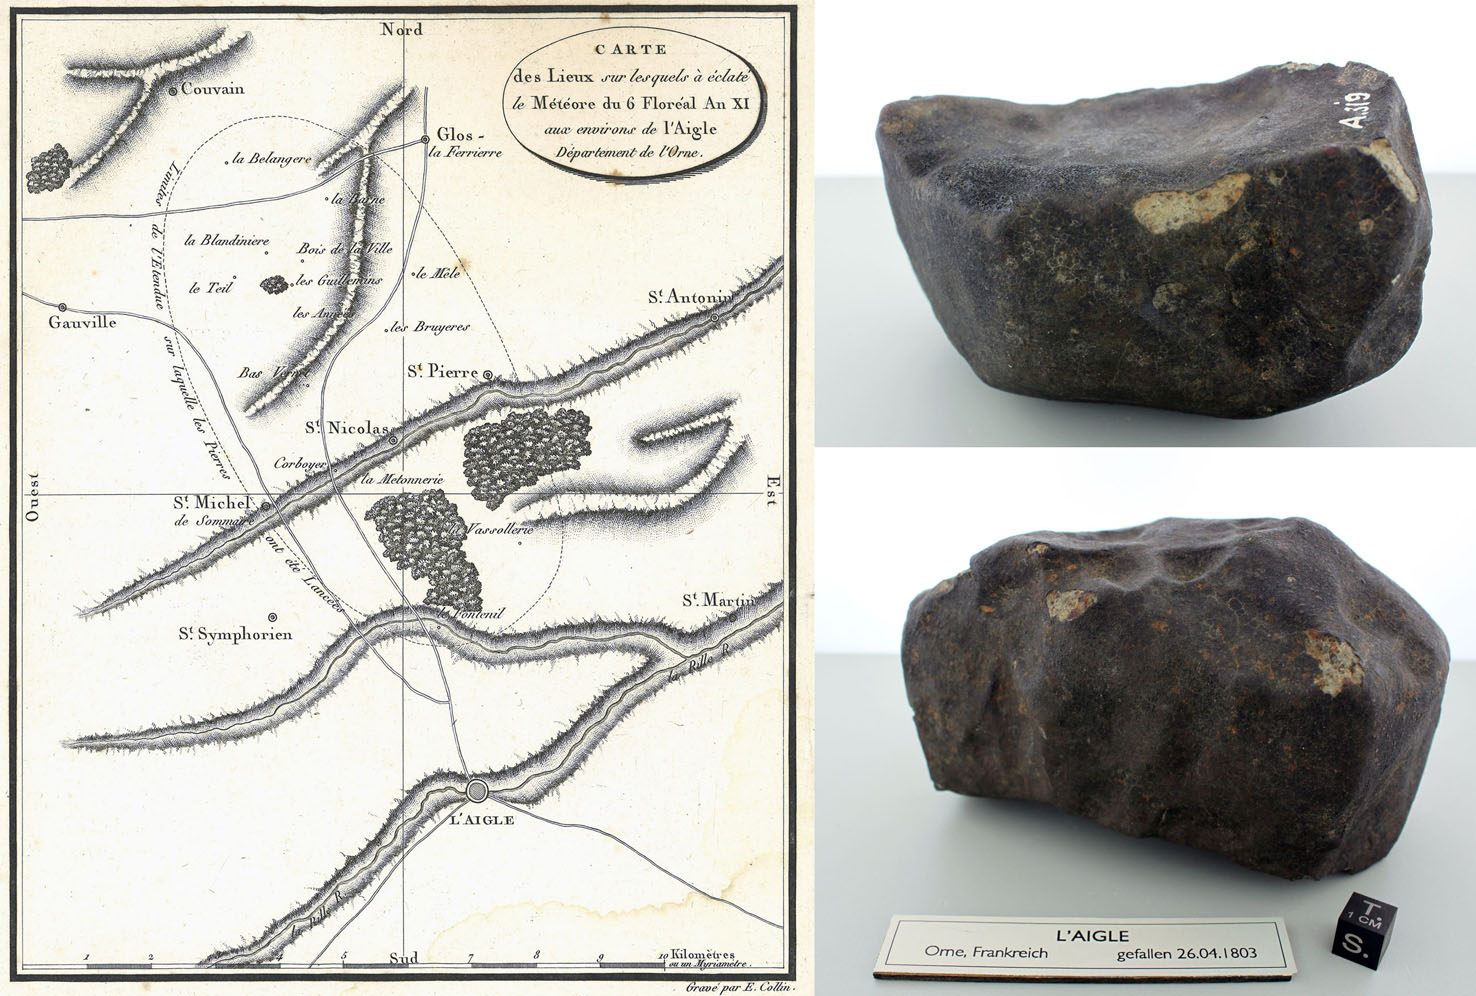 Map of L'Aigle meteorite strewn field (Biot, 1803) & views of a large piece of l'Aigle meteorite.